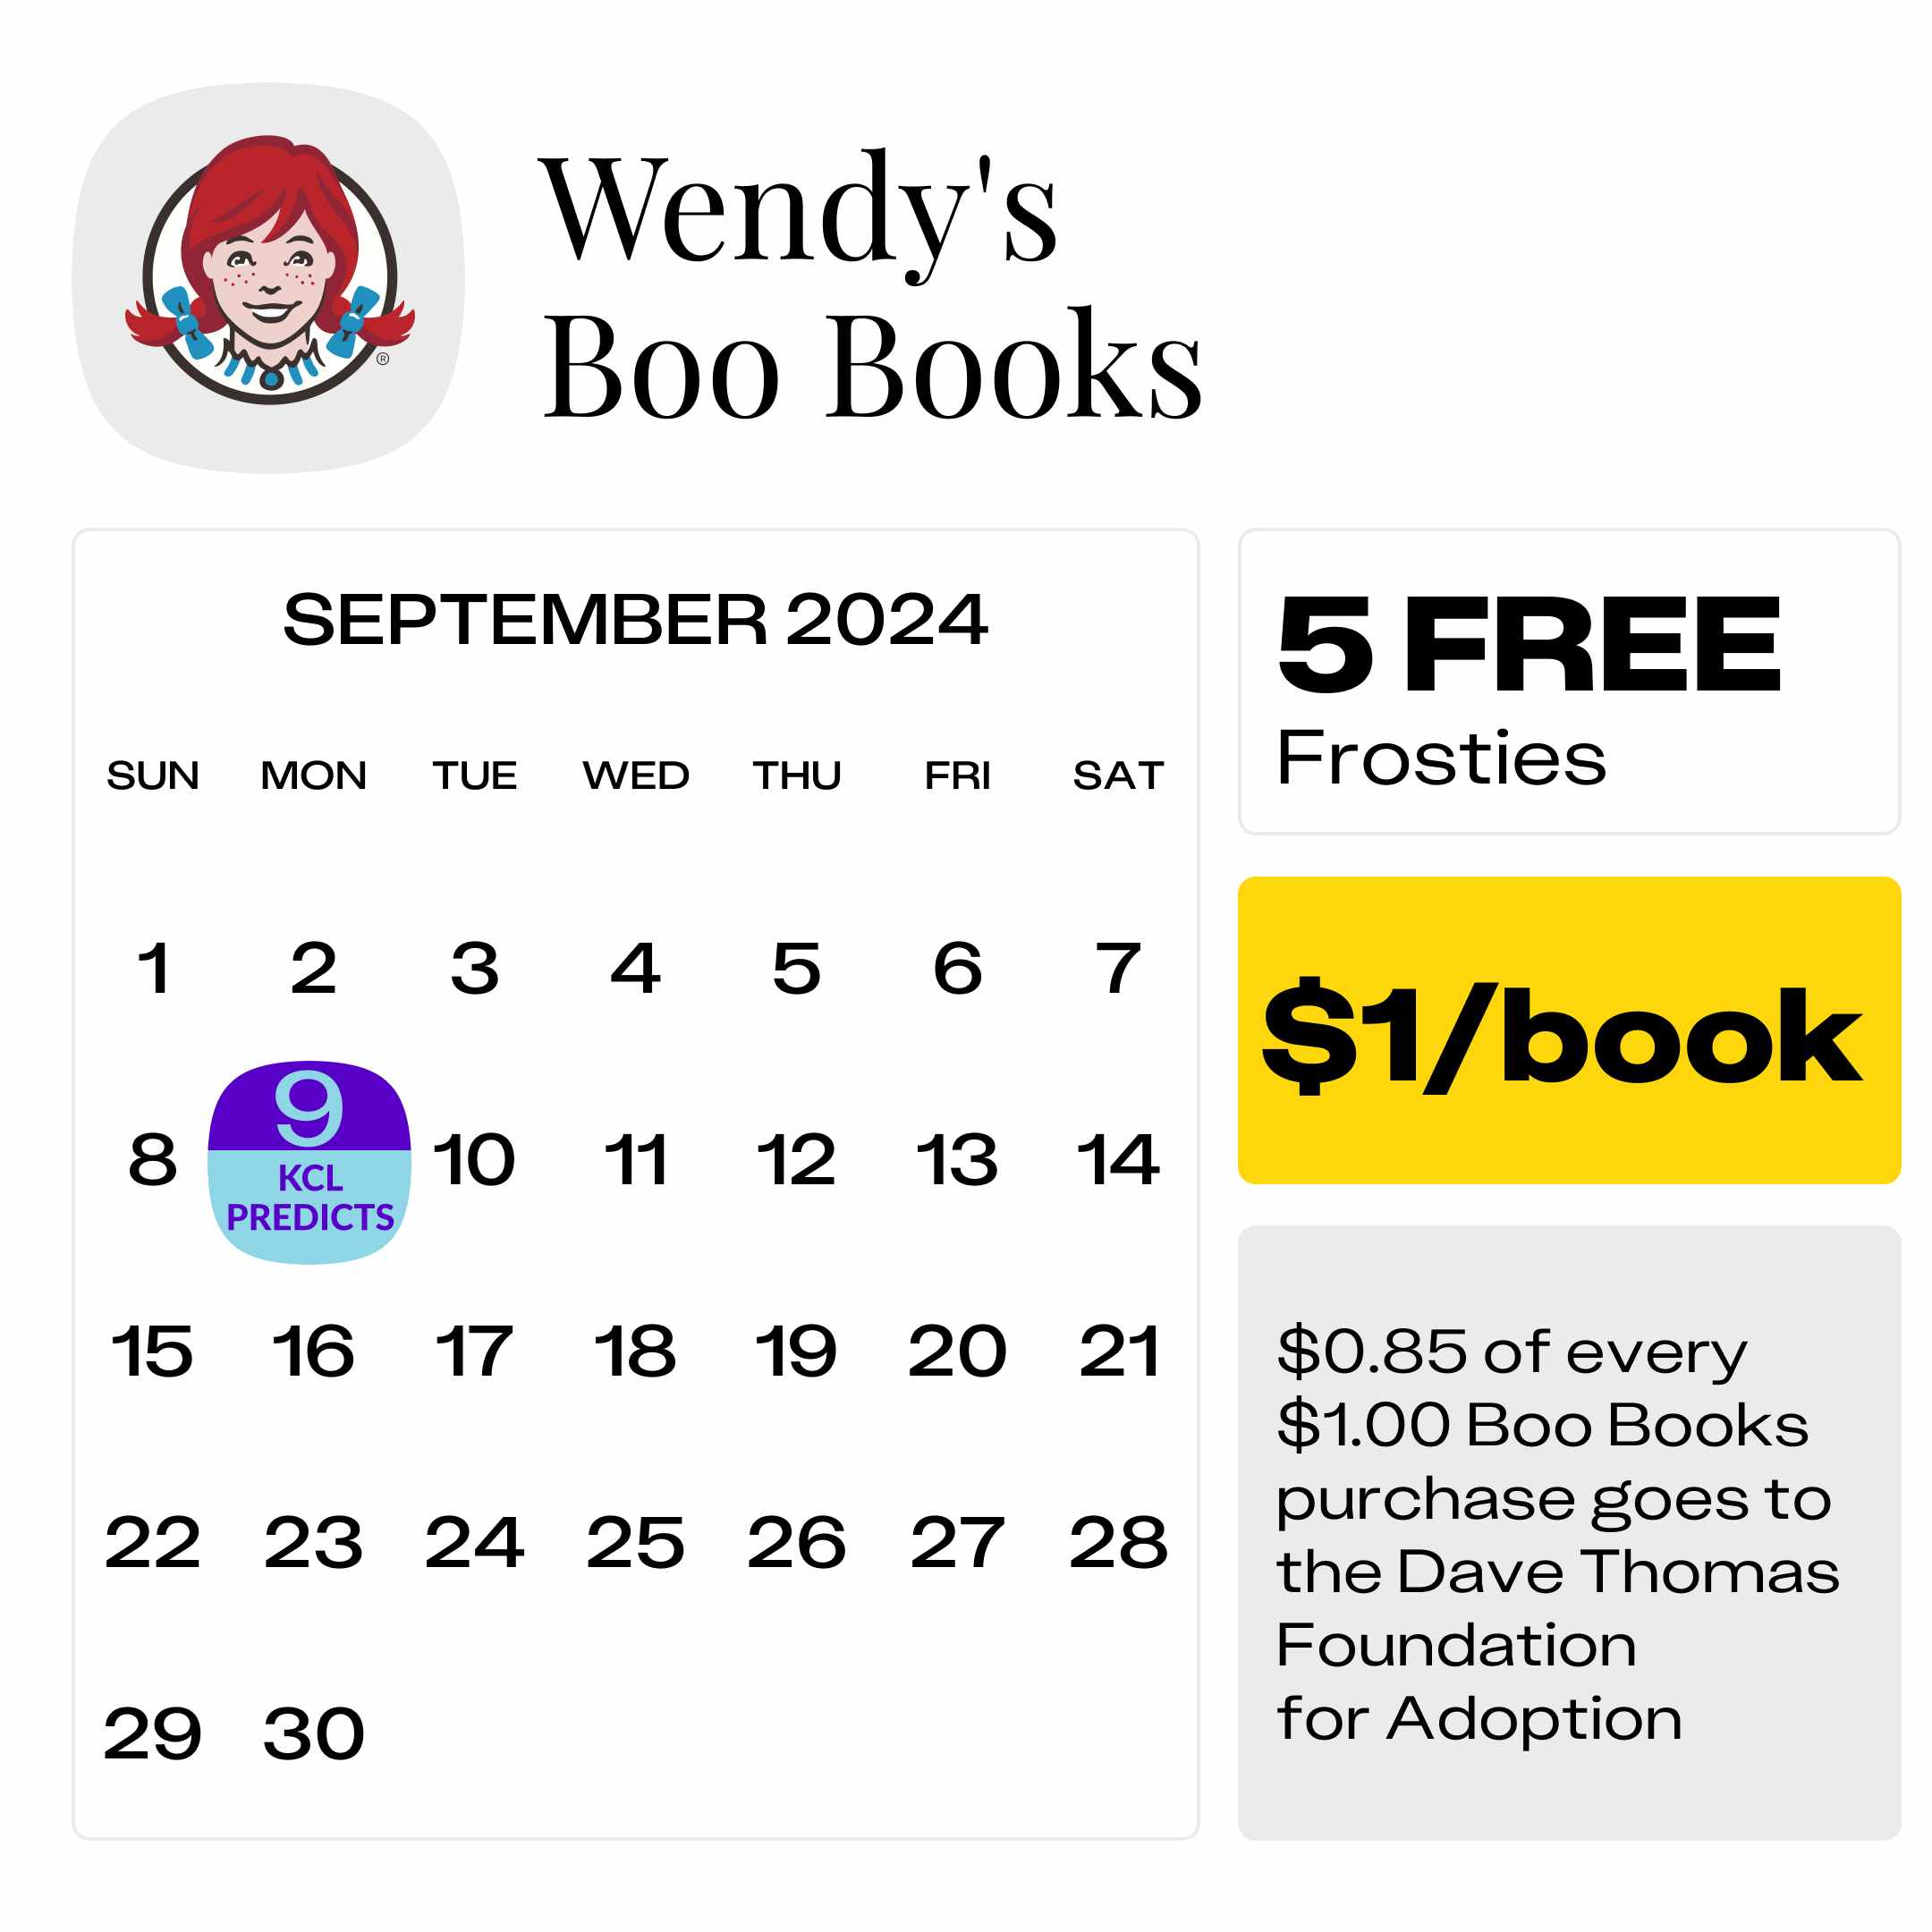 Wendys-Boo-Books